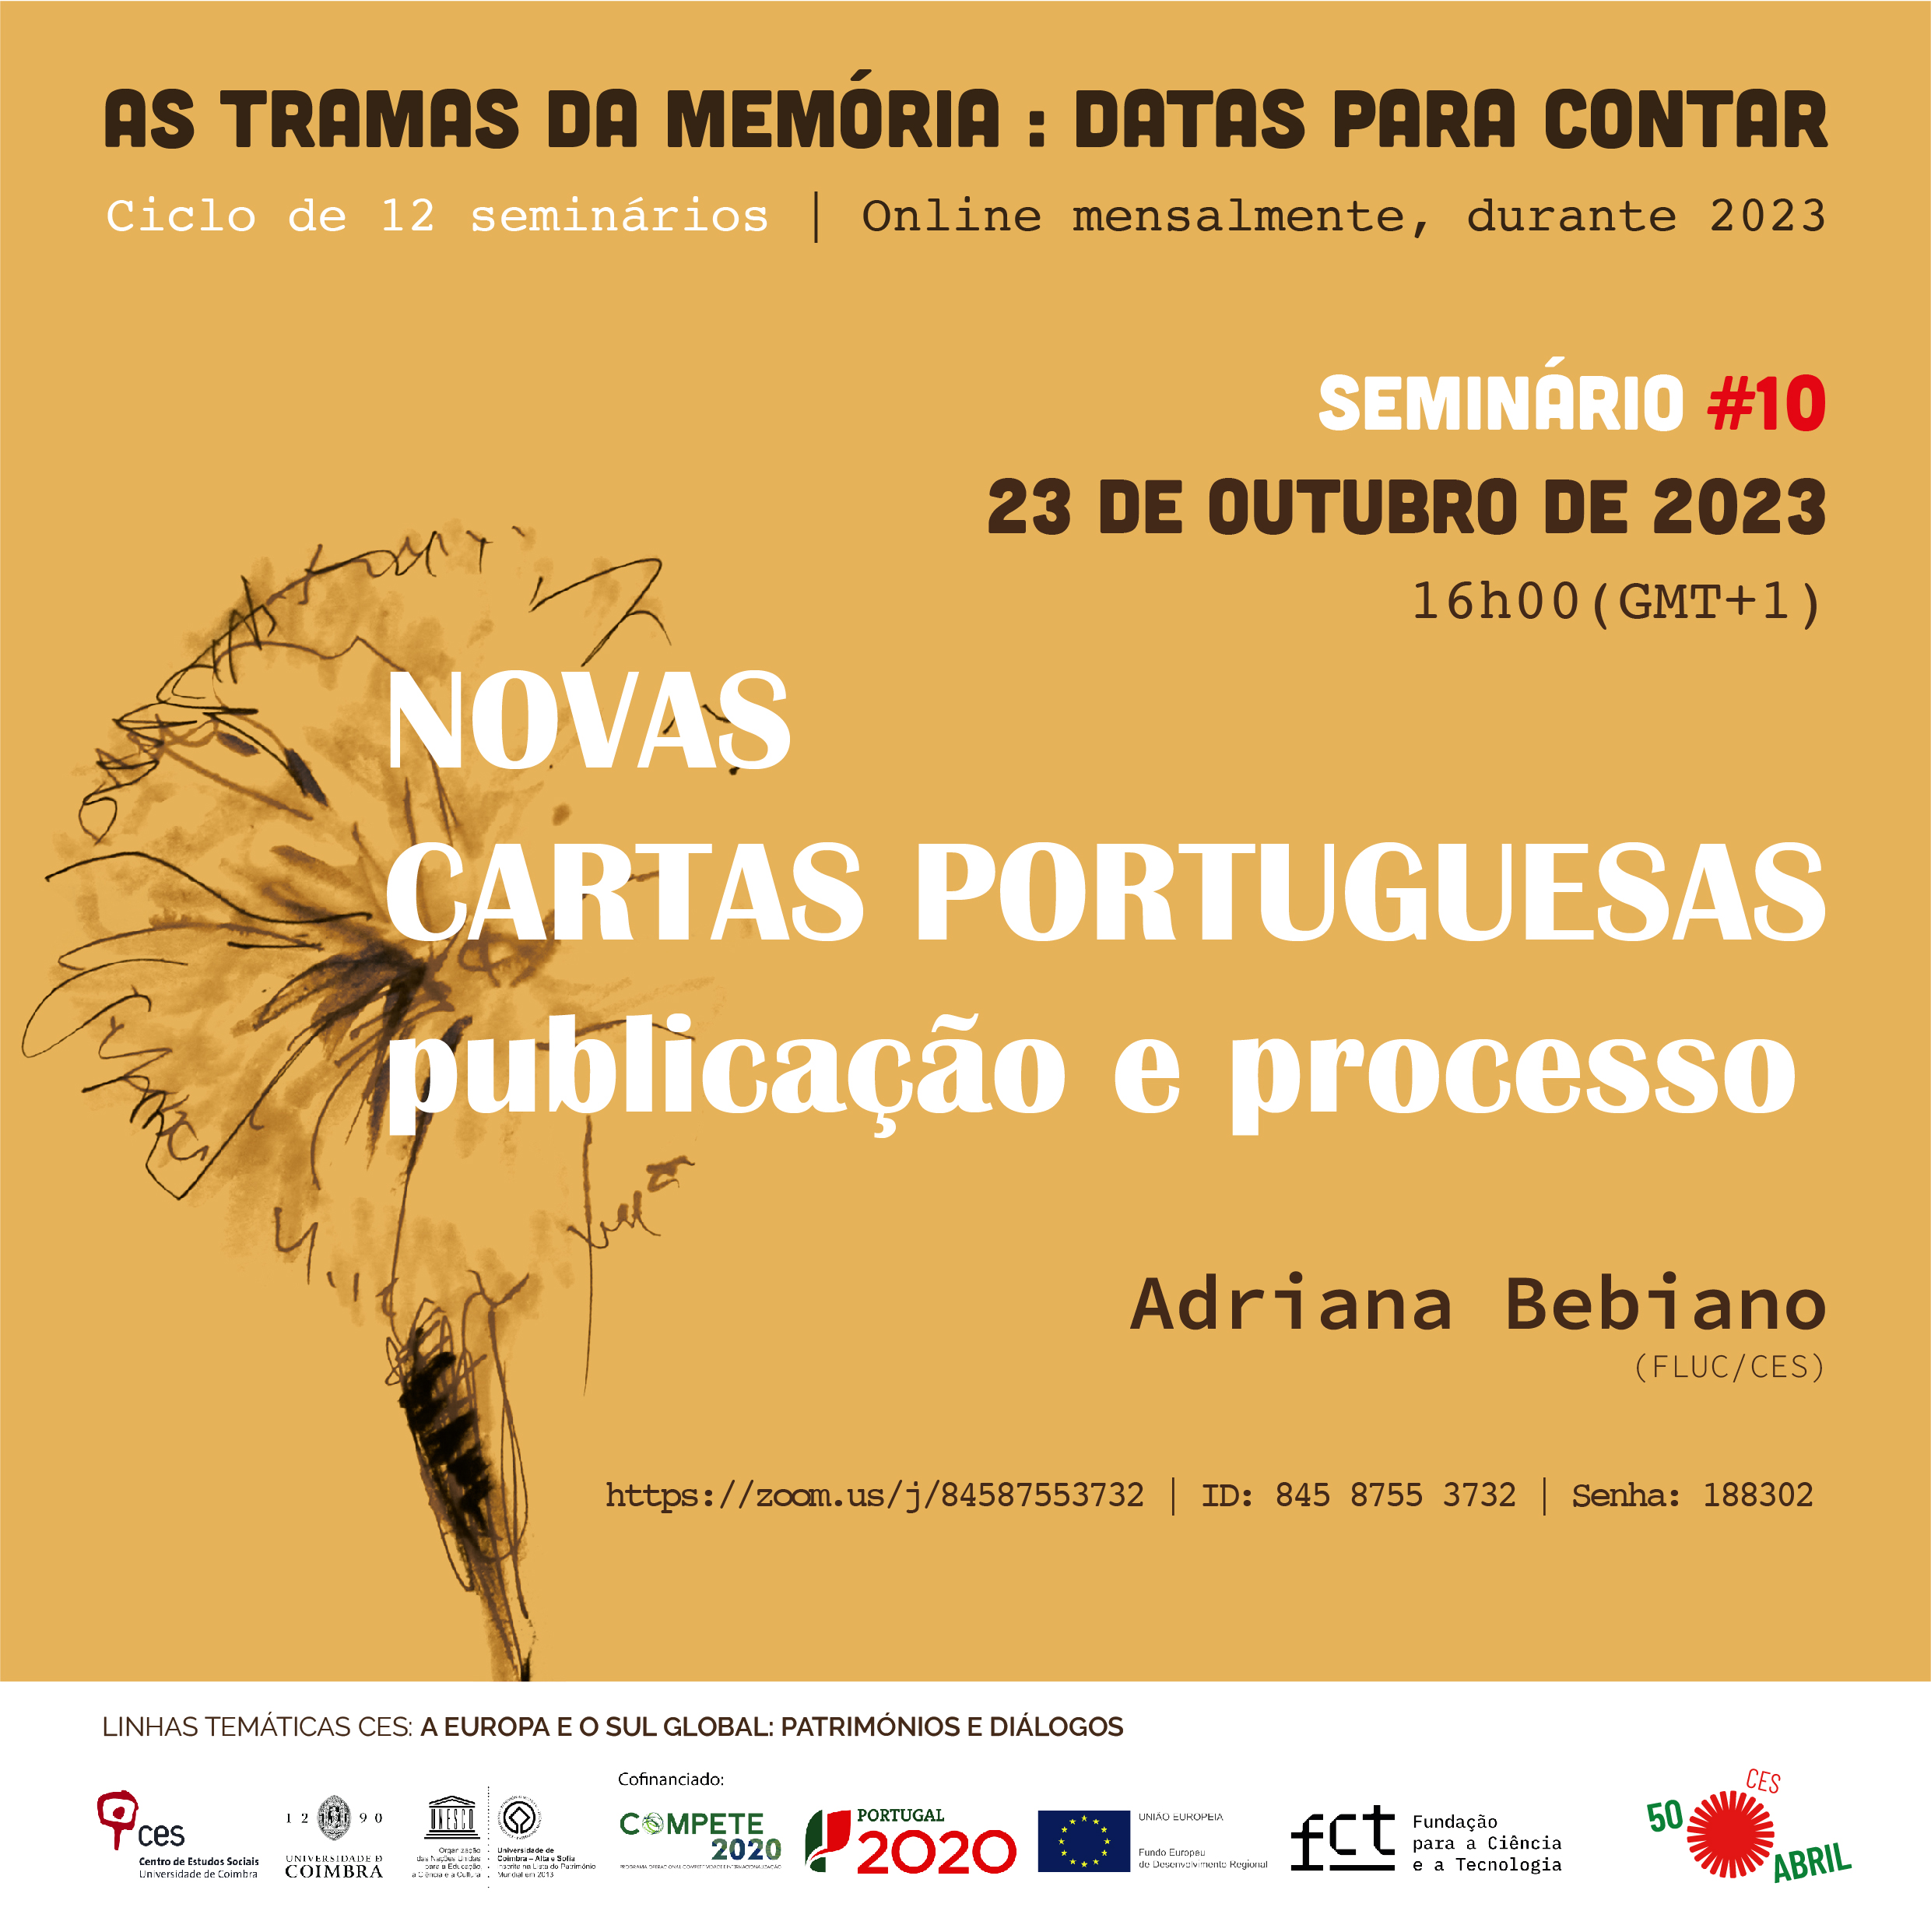 <em>Novas Cartas Portuguesas </em>- publication and process<span id="edit_41741"><script>$(function() { $('#edit_41741').load( "/myces/user/editobj.php?tipo=evento&id=41741" ); });</script></span>